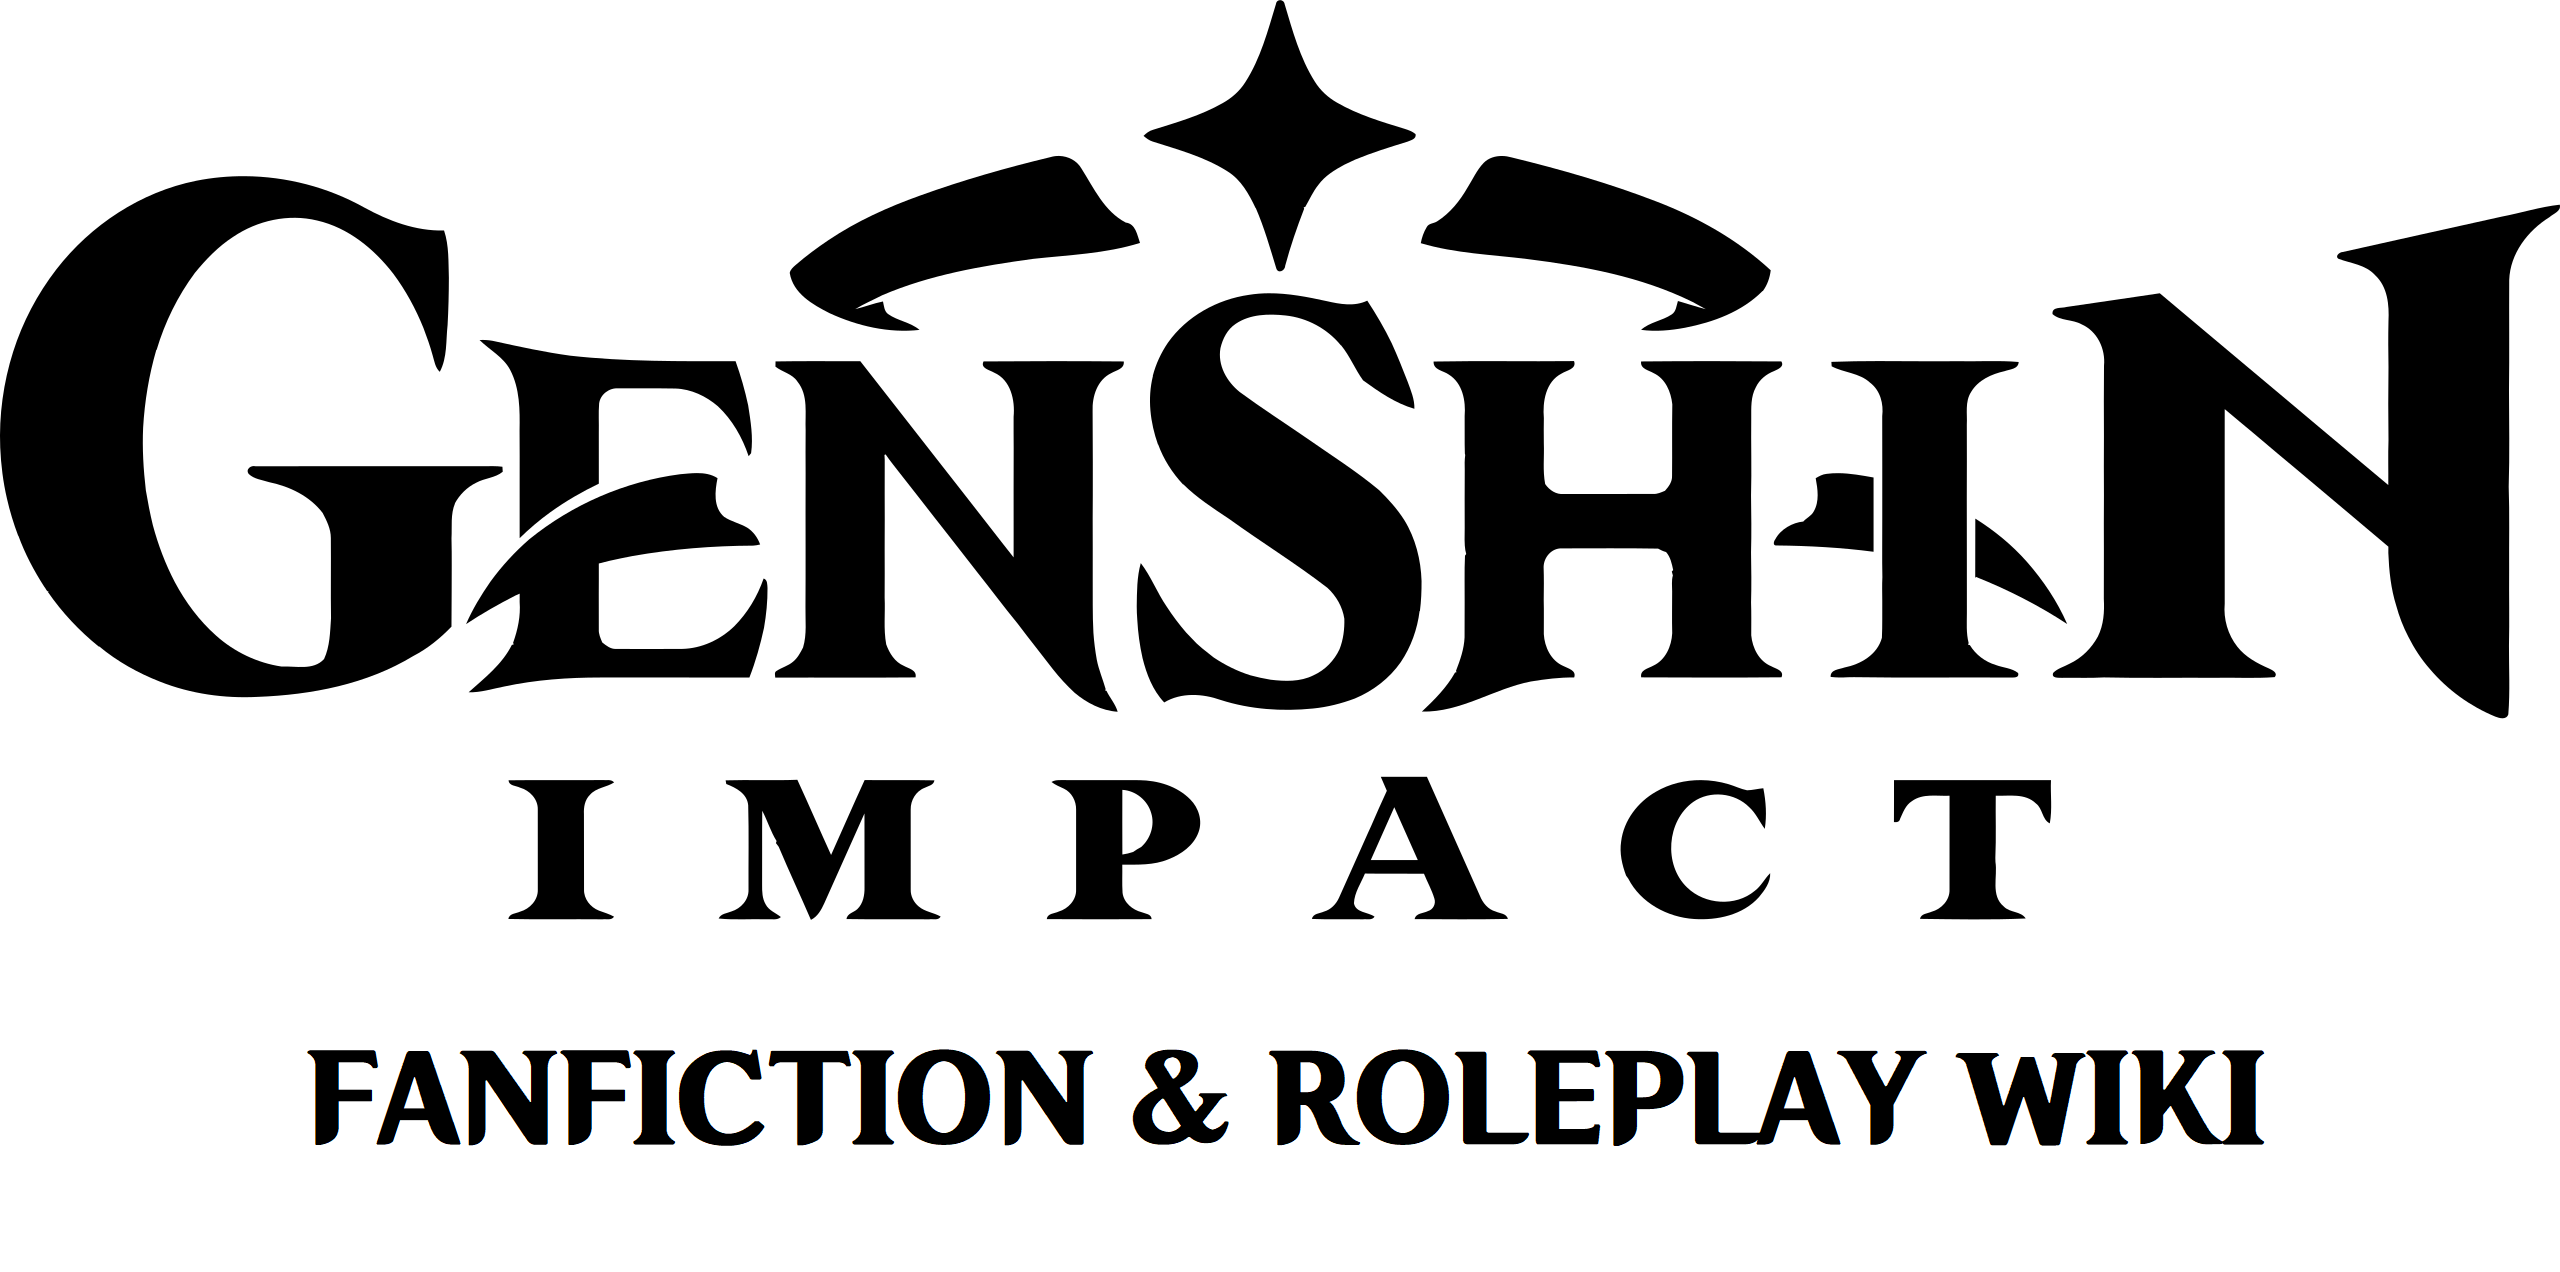 Aether Minci, Genshin Impact Fanfiction & Roleplay Wiki